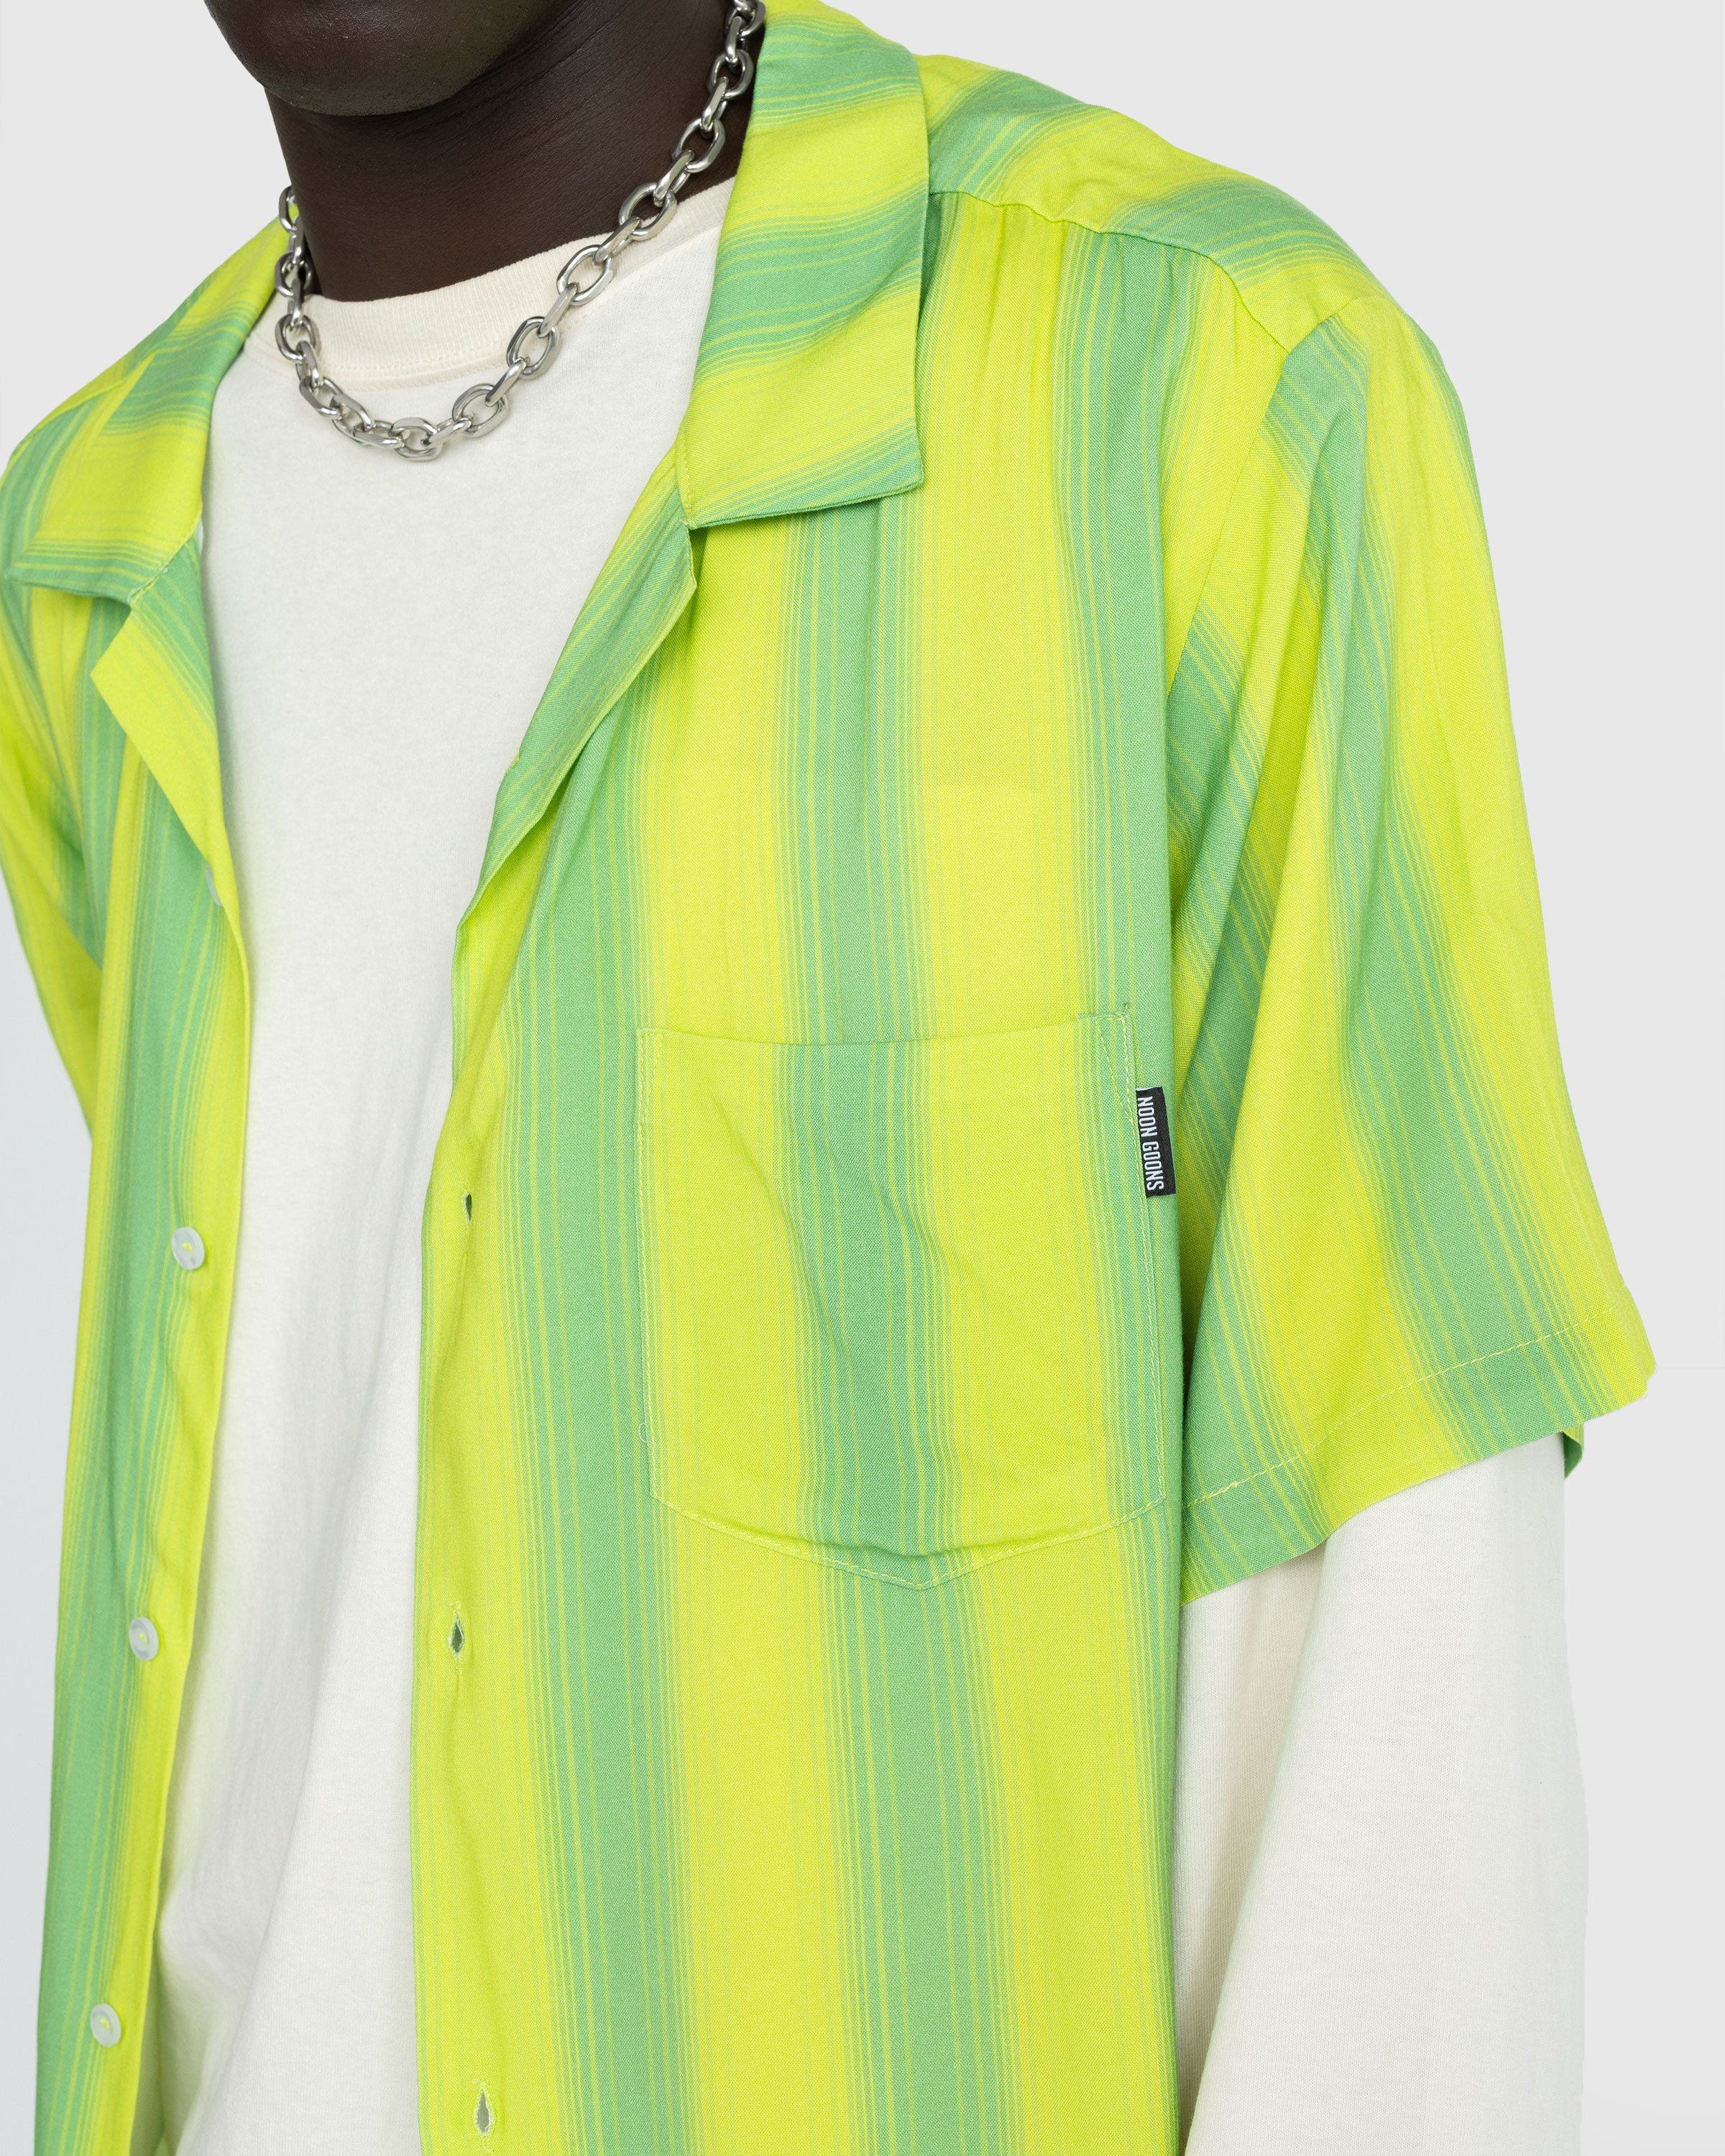 Noon Goons - High Society Shirt Limeade - Clothing - Green - Image 5